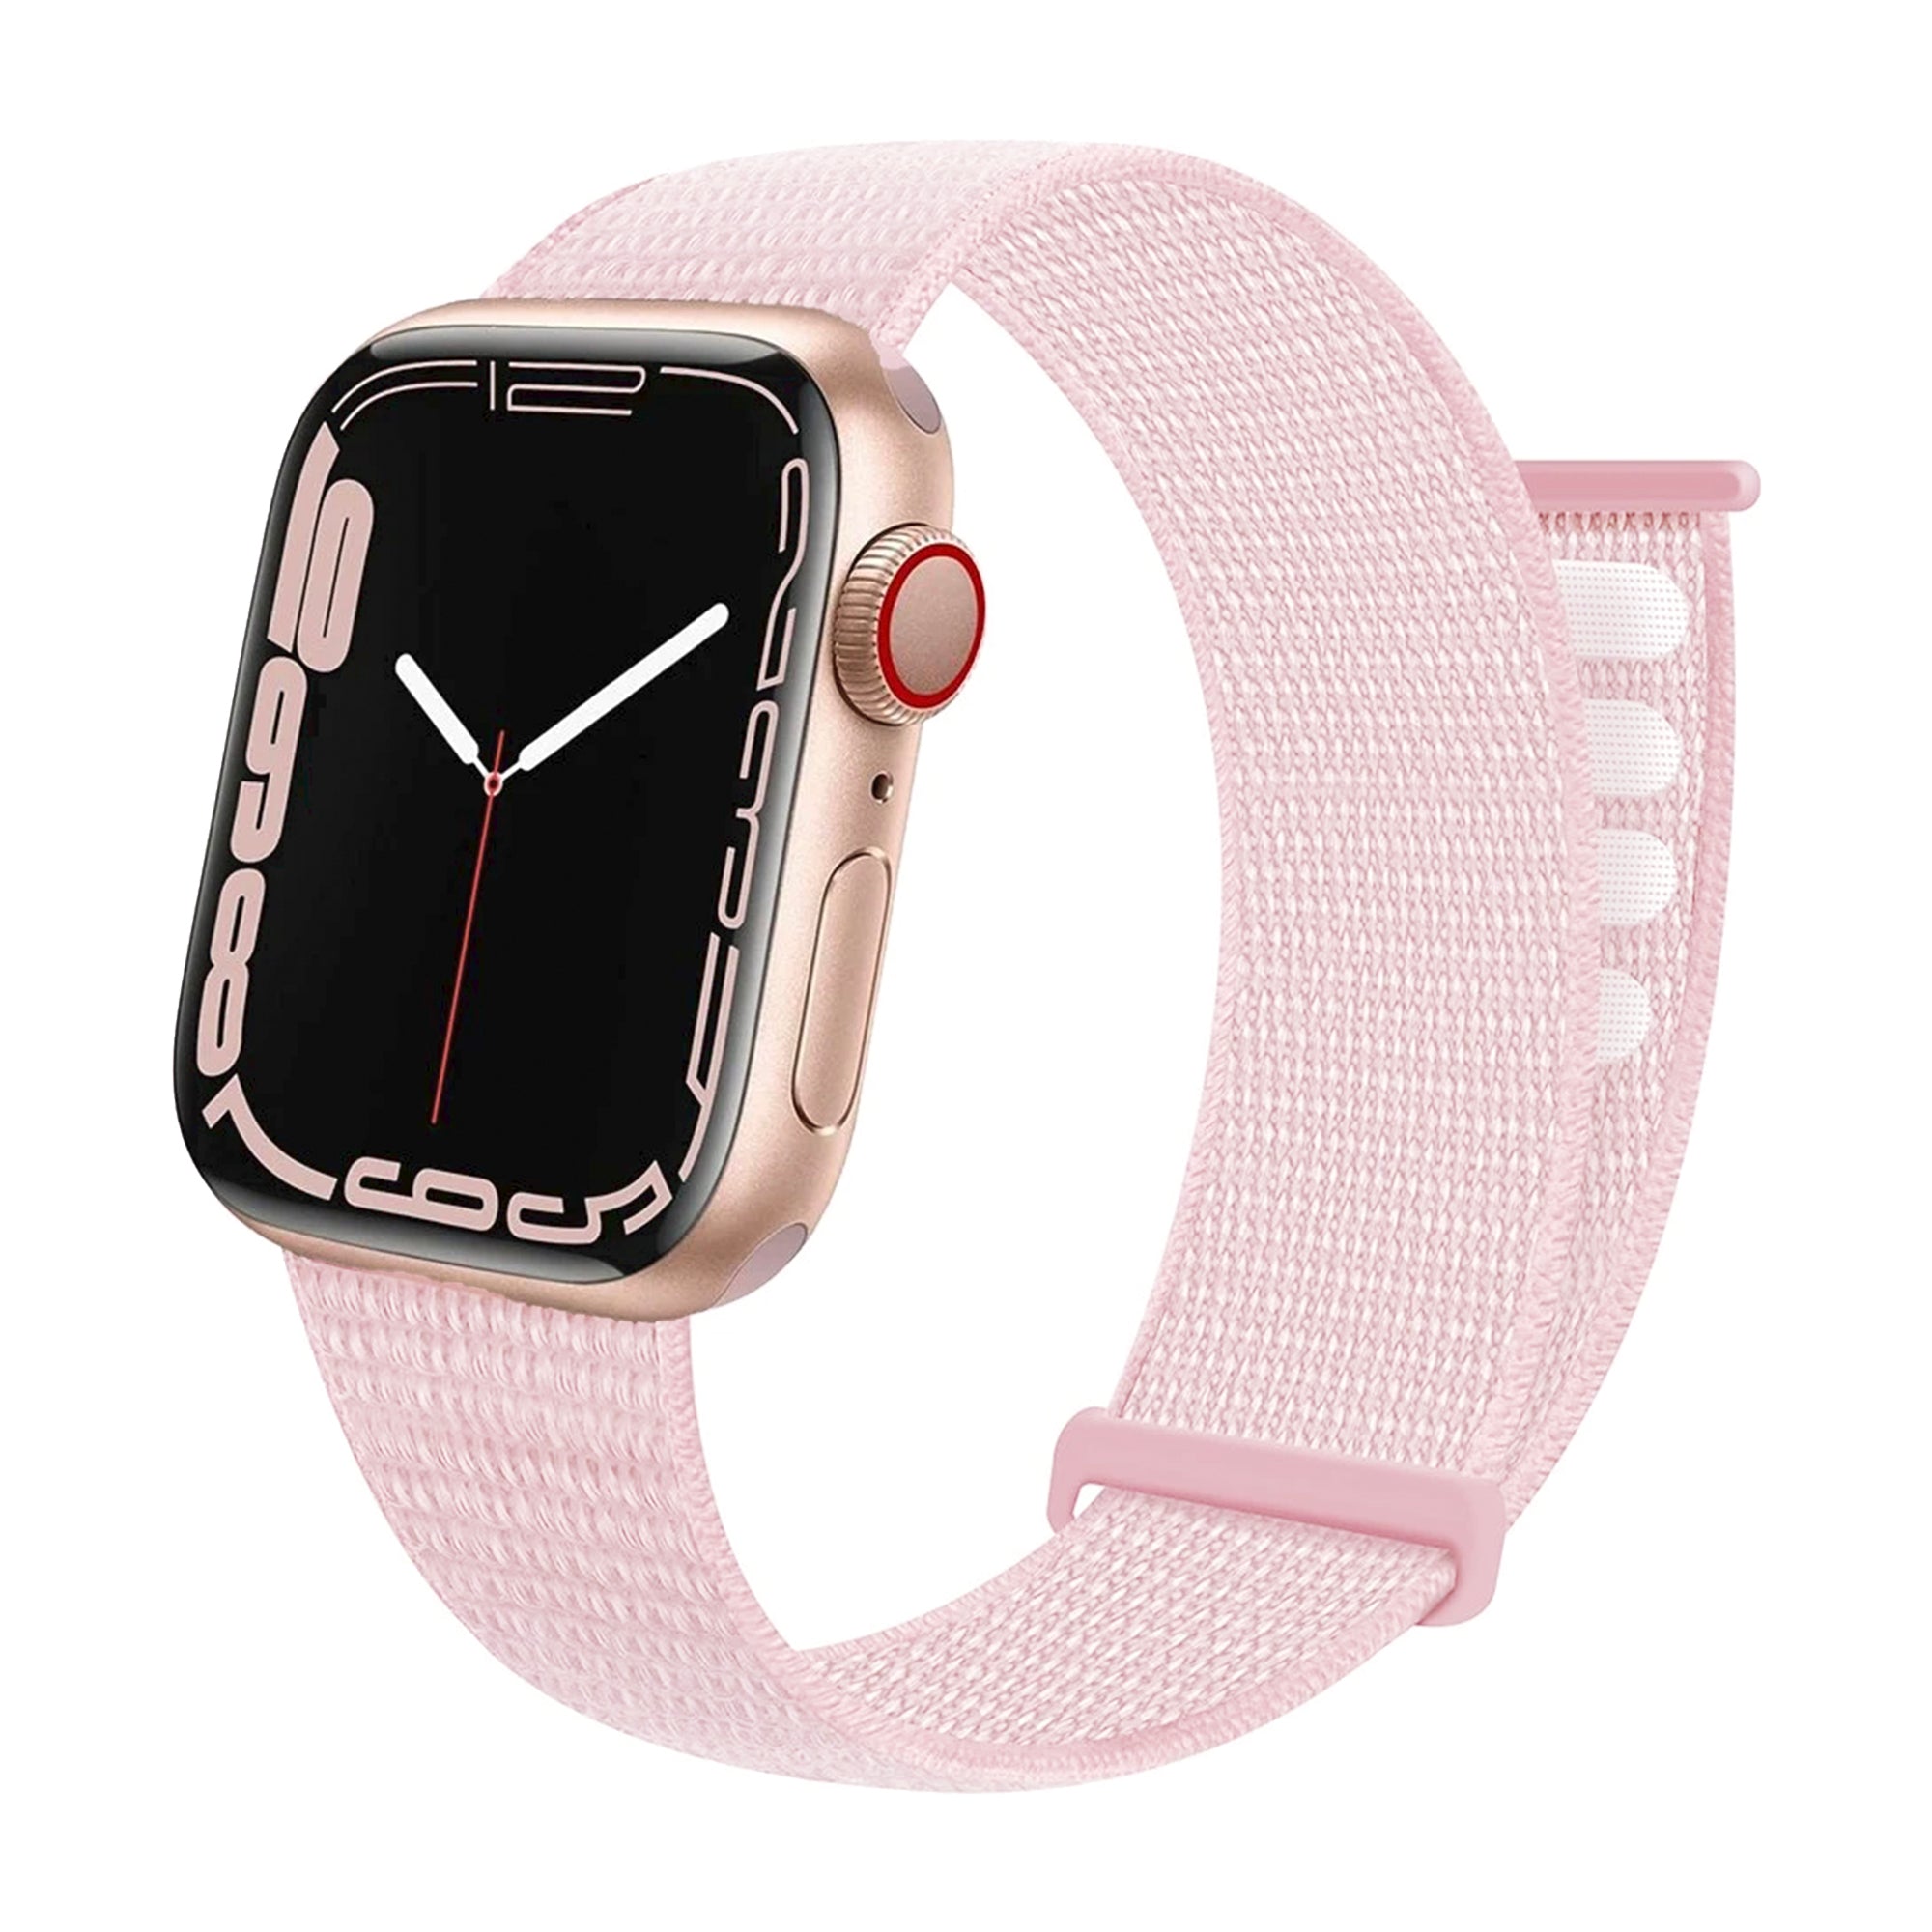 Apple Watch nylon strap - light pink